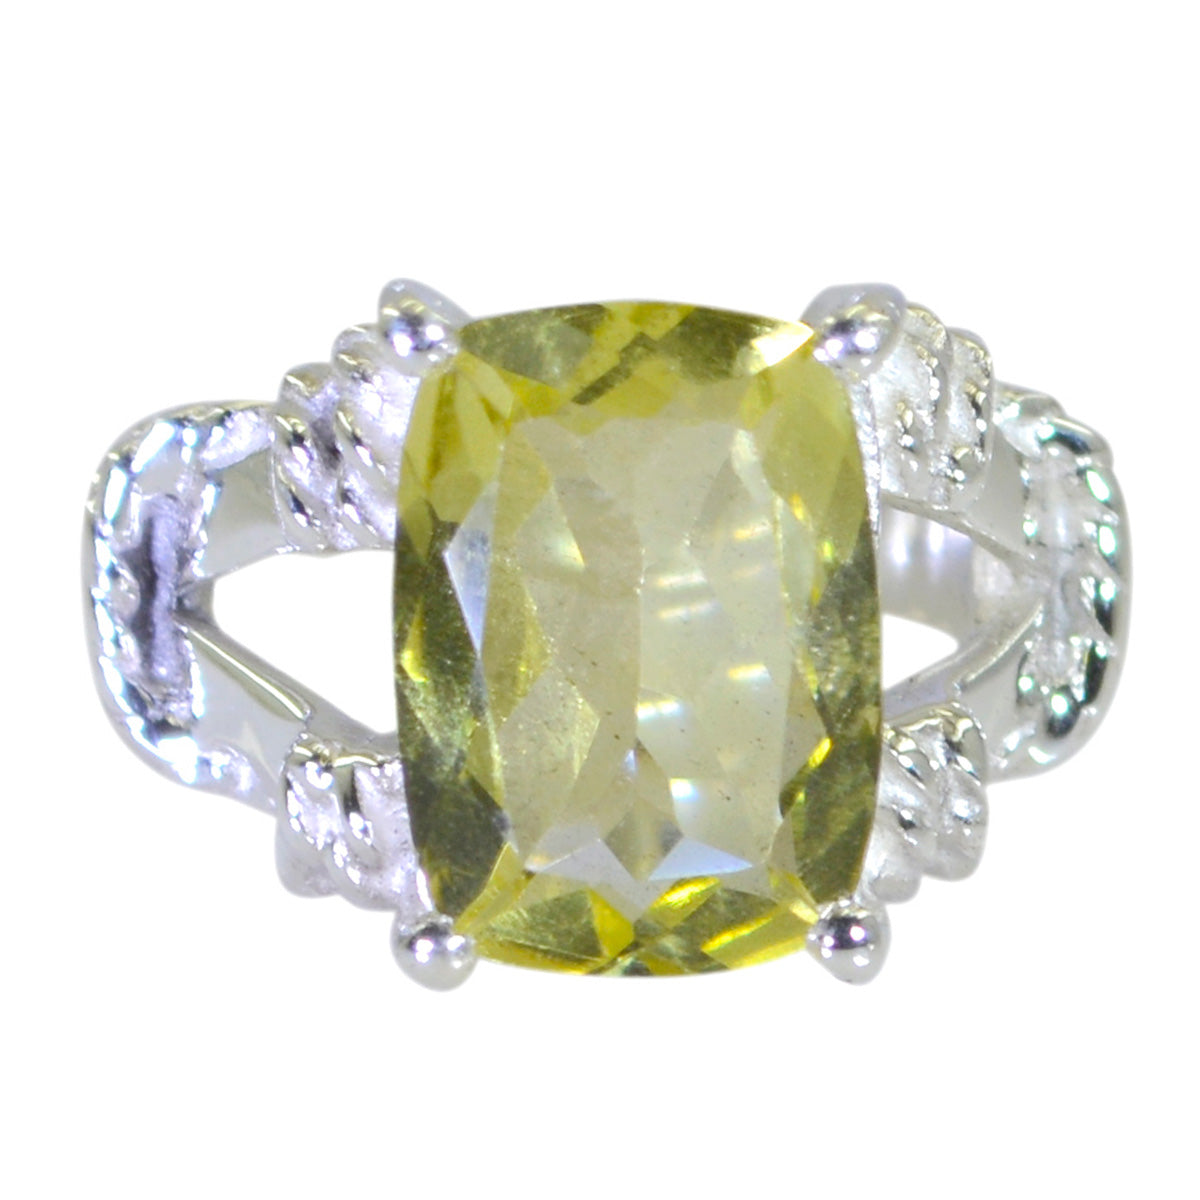 Riyo Natural Gemstones Lemon Quartz 925 Rings Travel Jewelry Cases